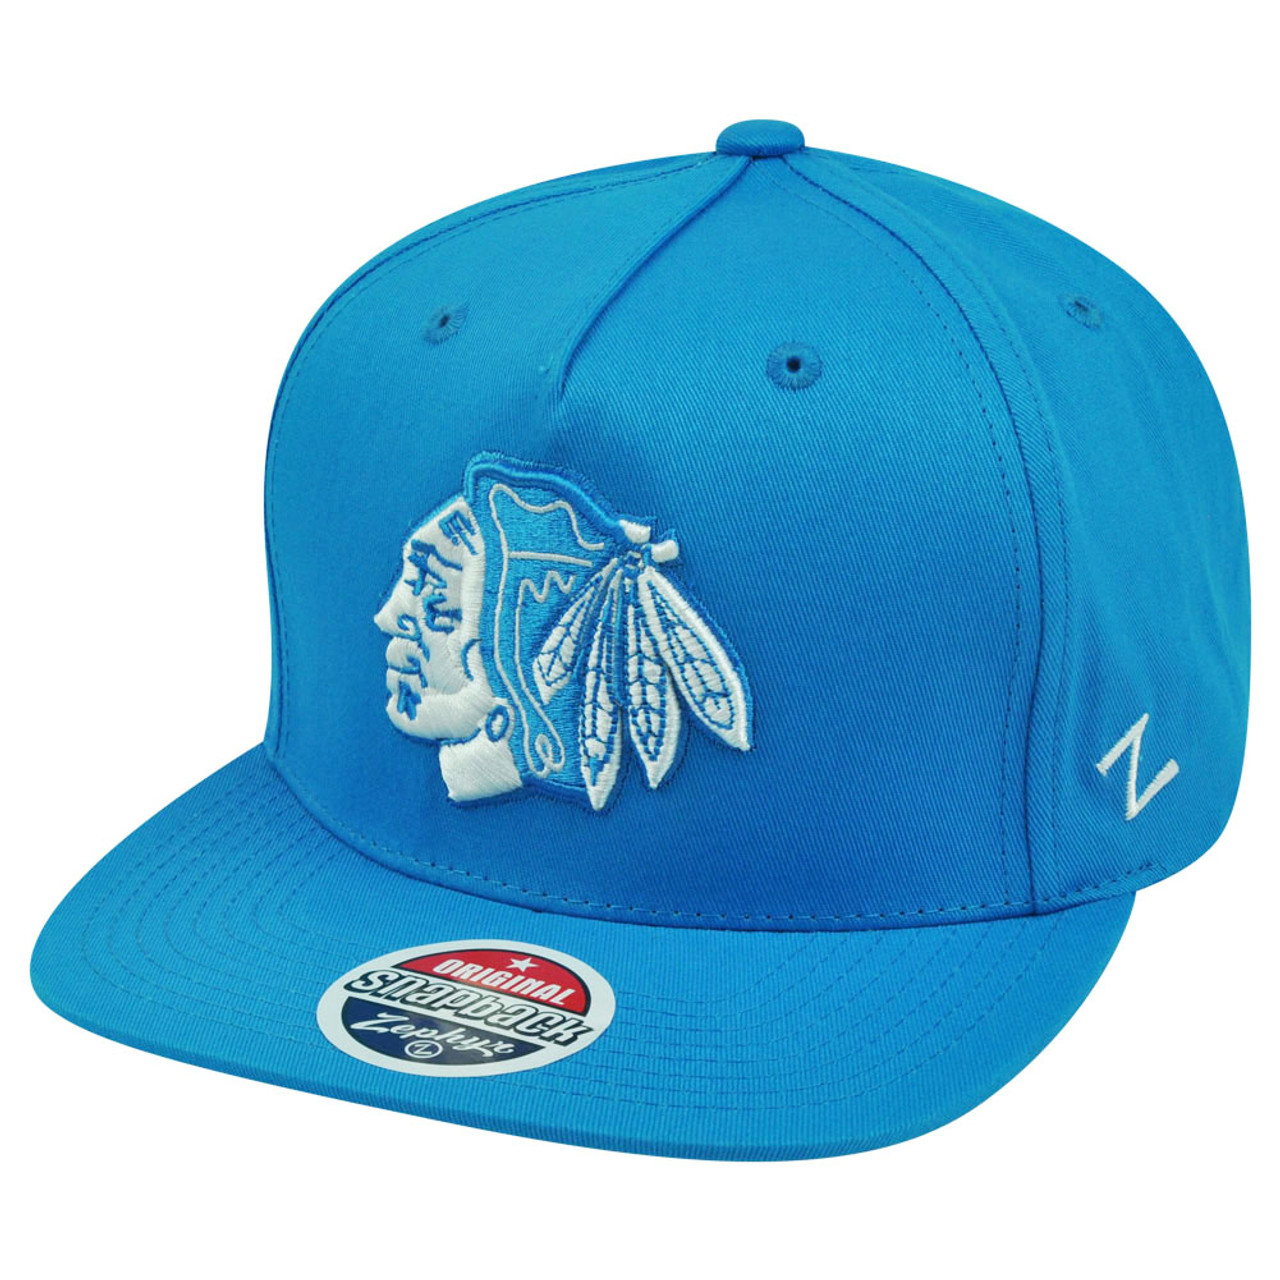 Chicago Blackhawks Pet Baseball Hat - Small